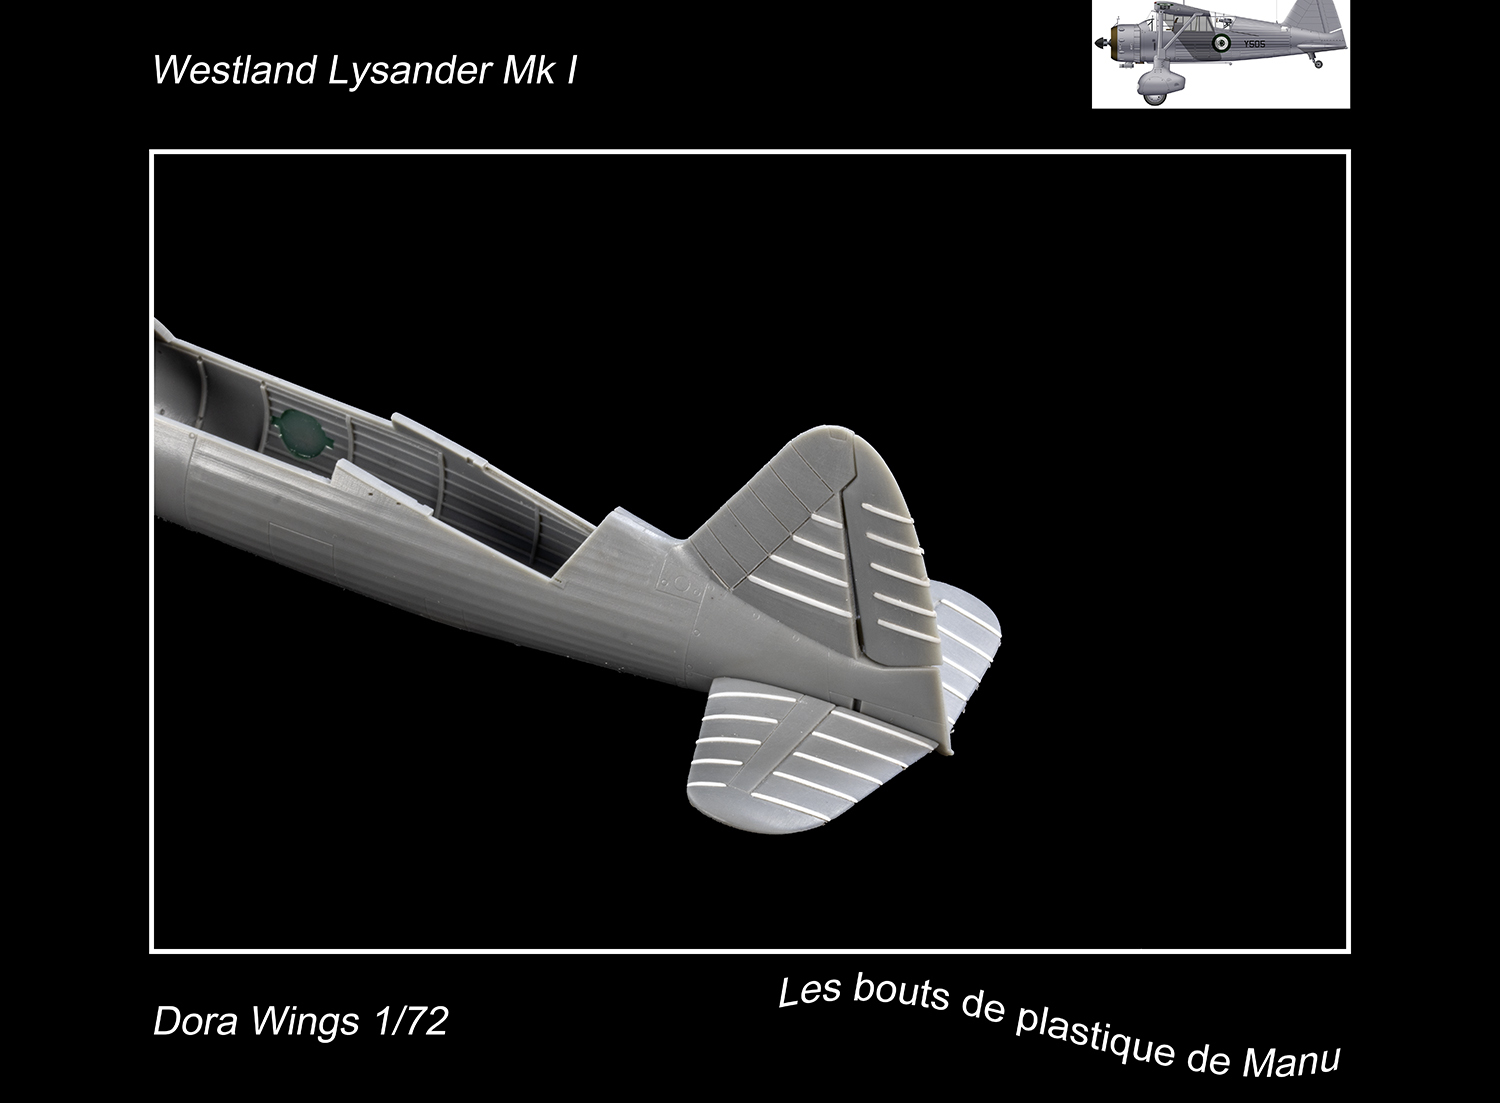 [Dora Wings] Westland Lysander Mk I - Je préfère en rire... 9q98